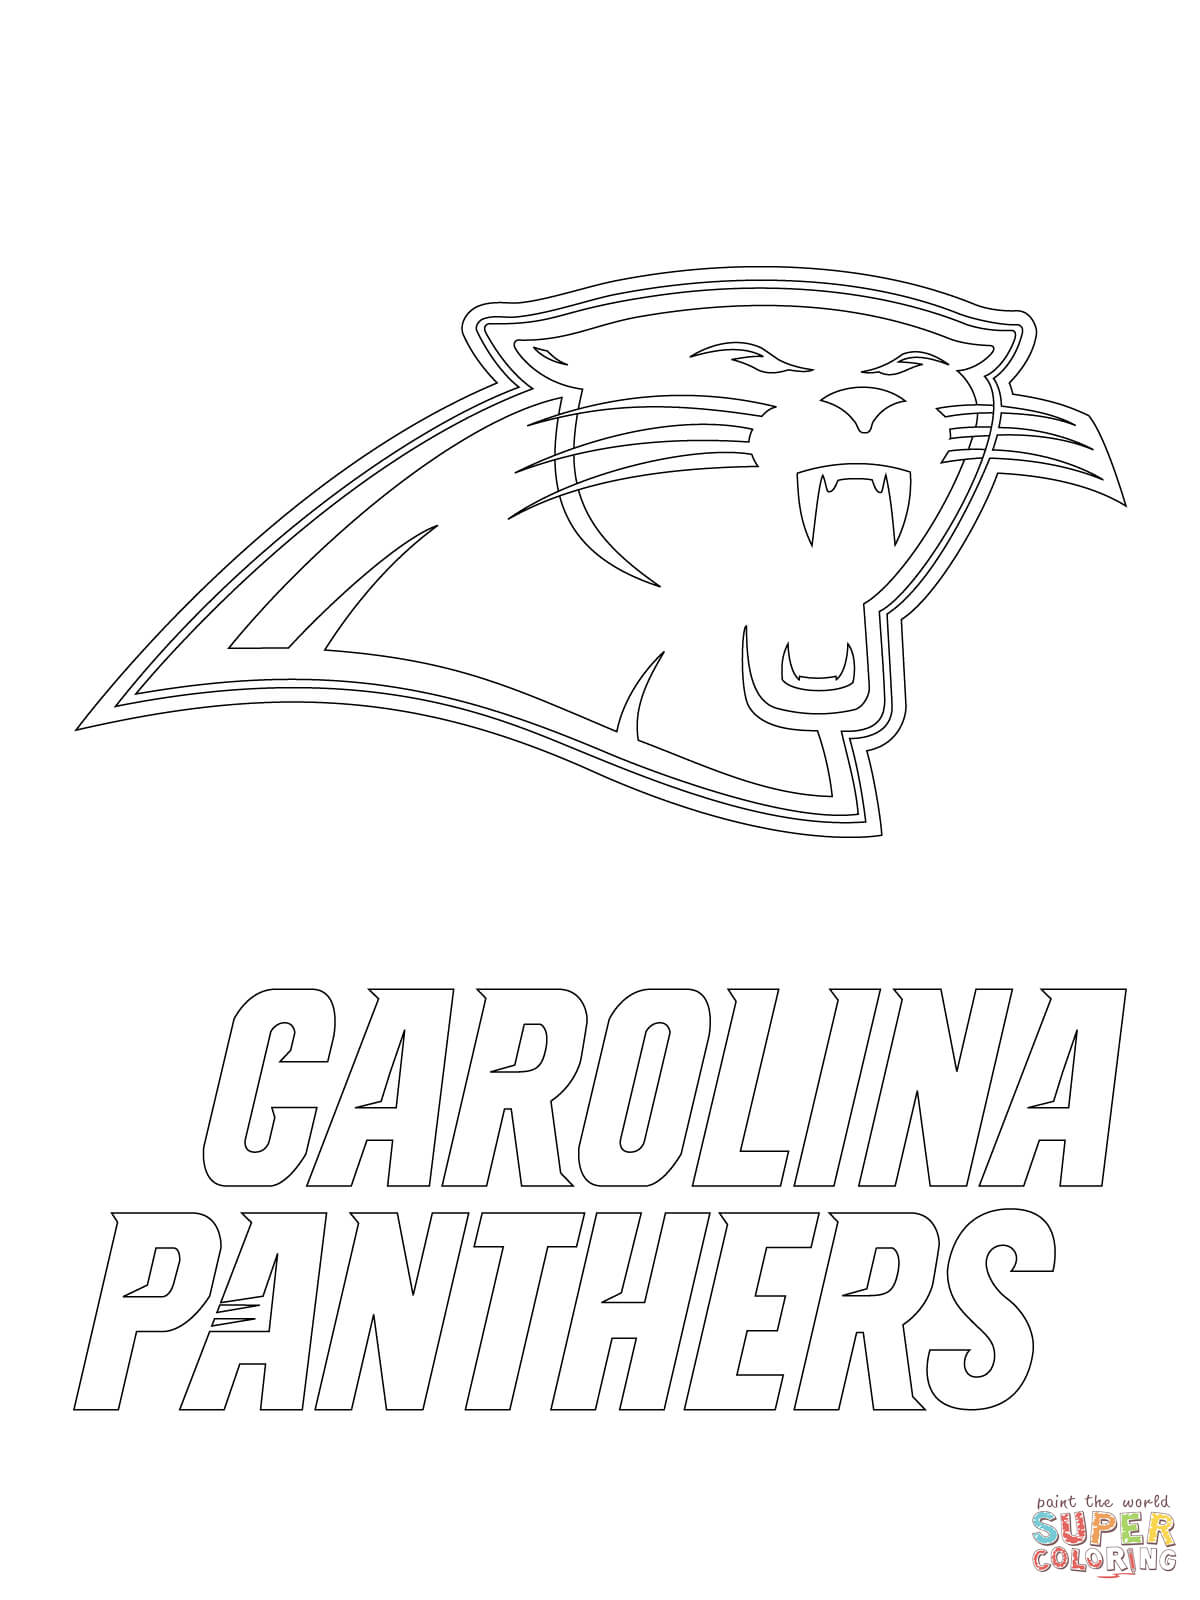 Carolina Panthers Logo coloring page | Free Printable Coloring Pages